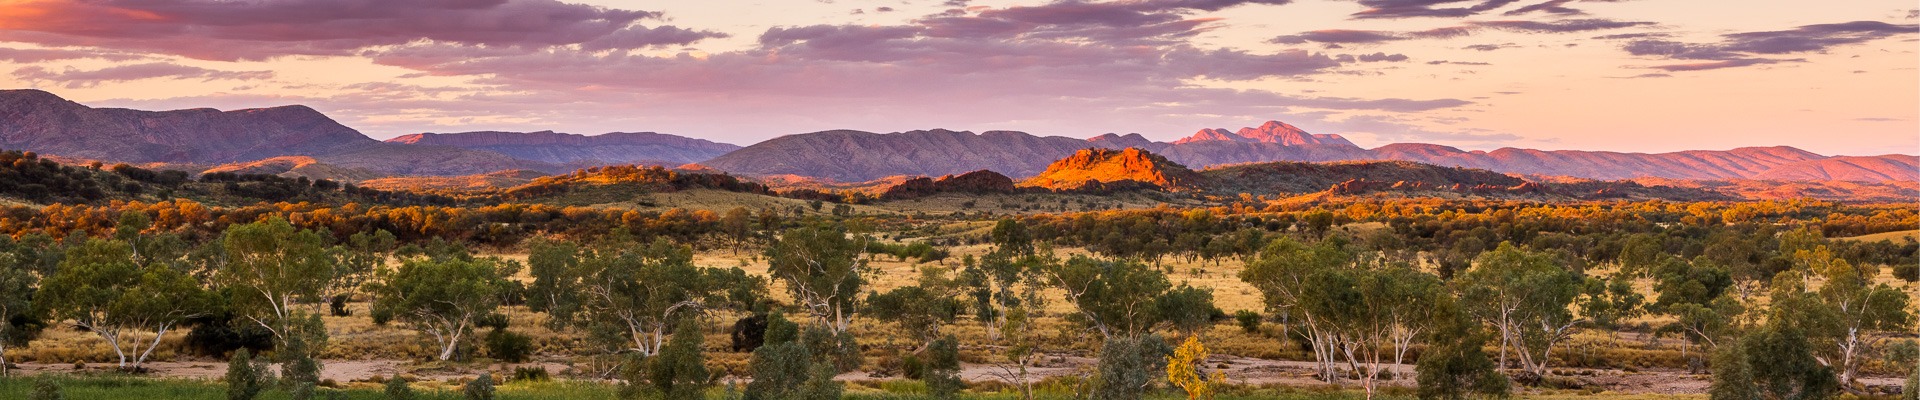 matthew duke header landscape photo of outback Australia